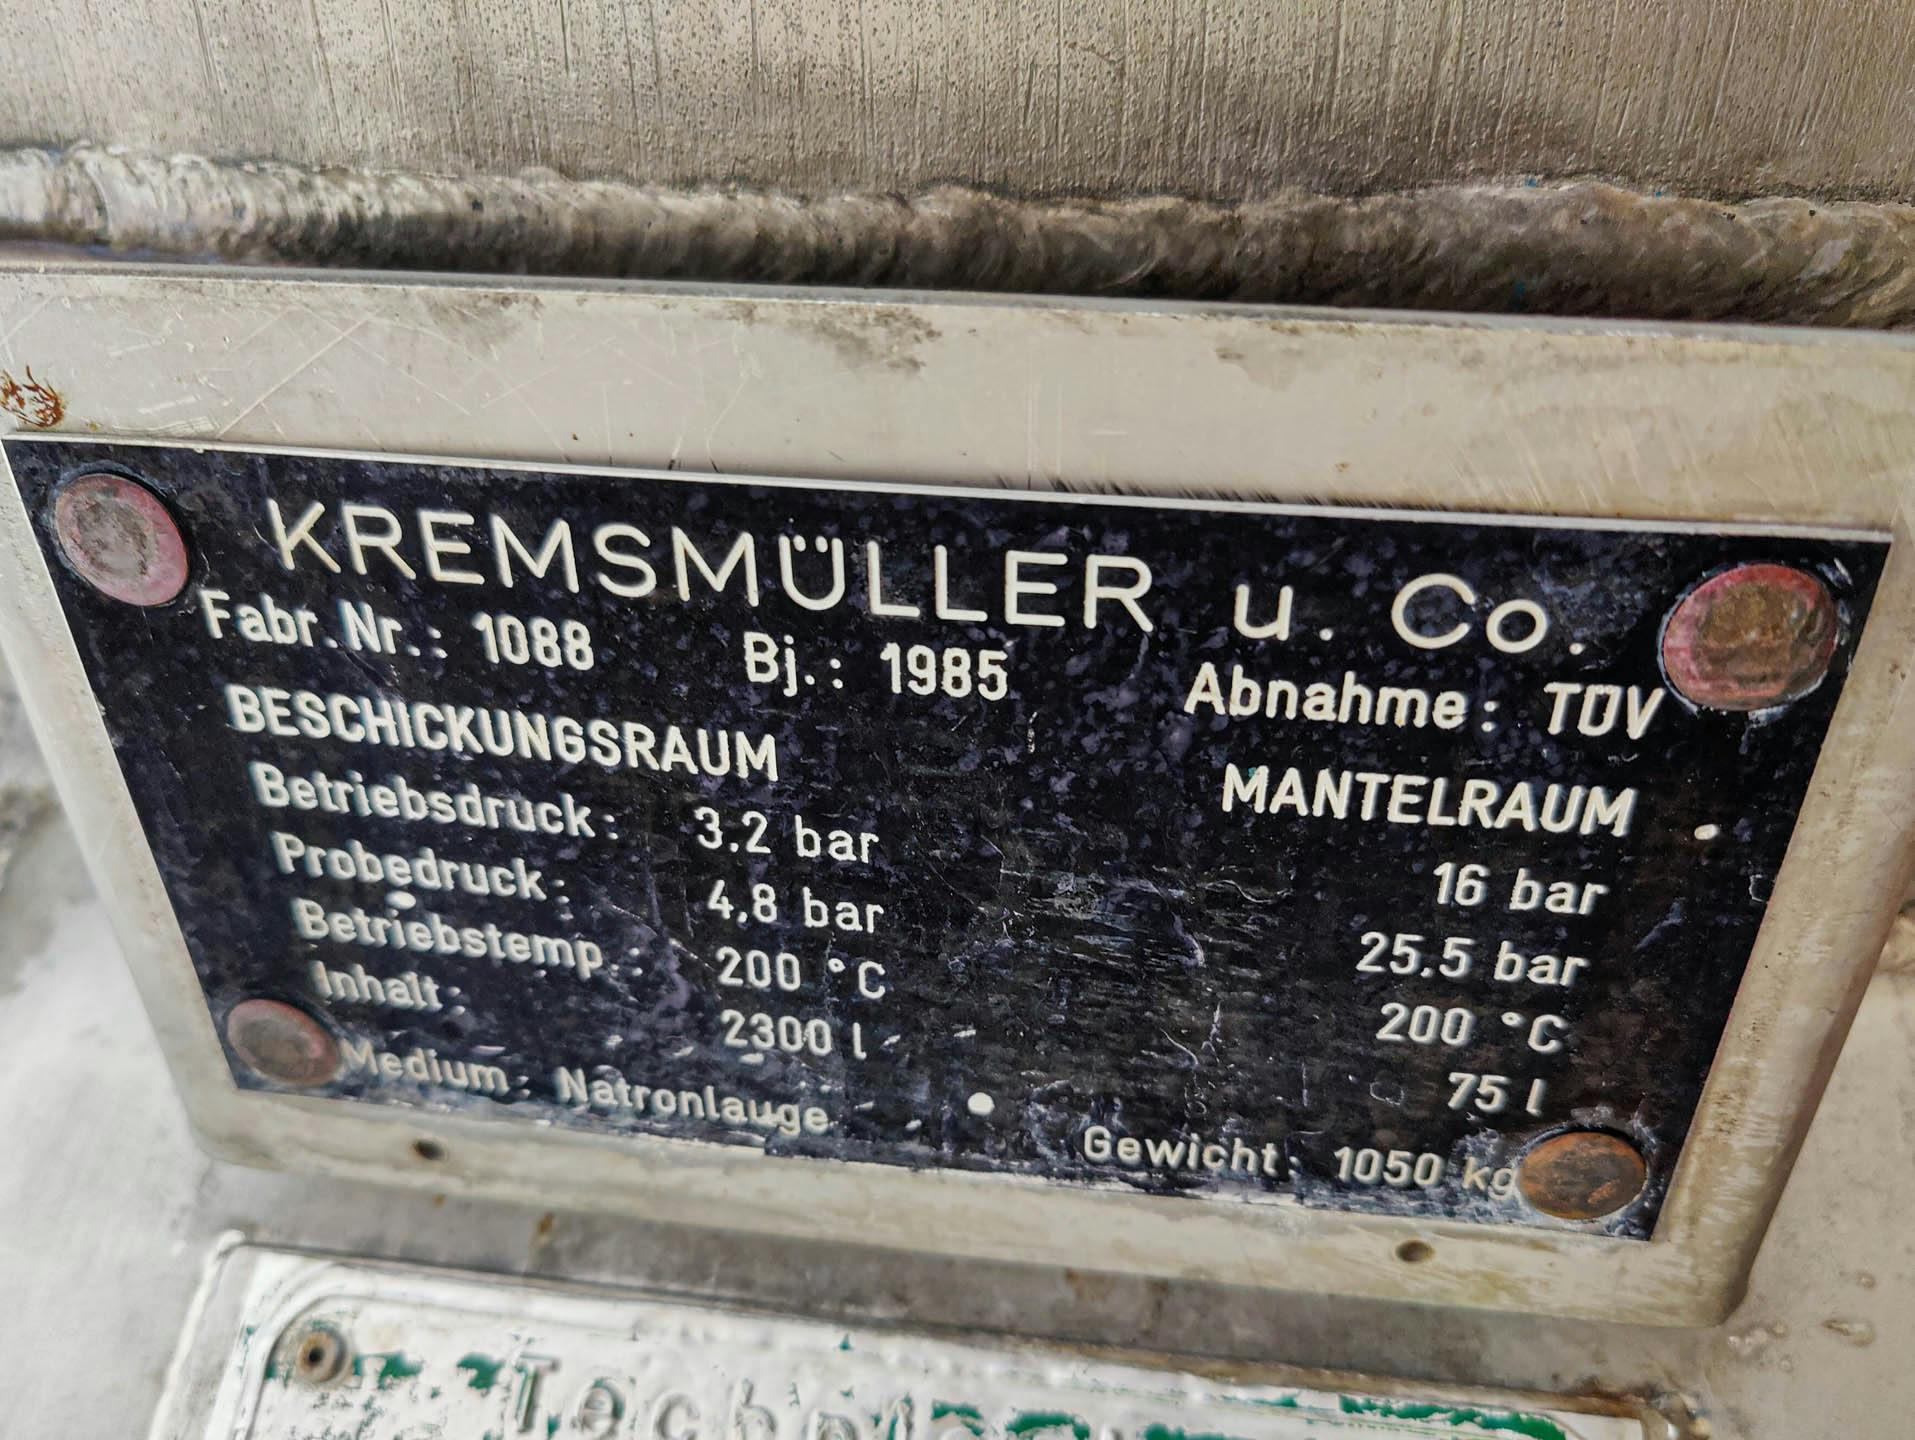 Kremsmüller 2000 Ltr. - Reactor de aço inoxidável - image 13